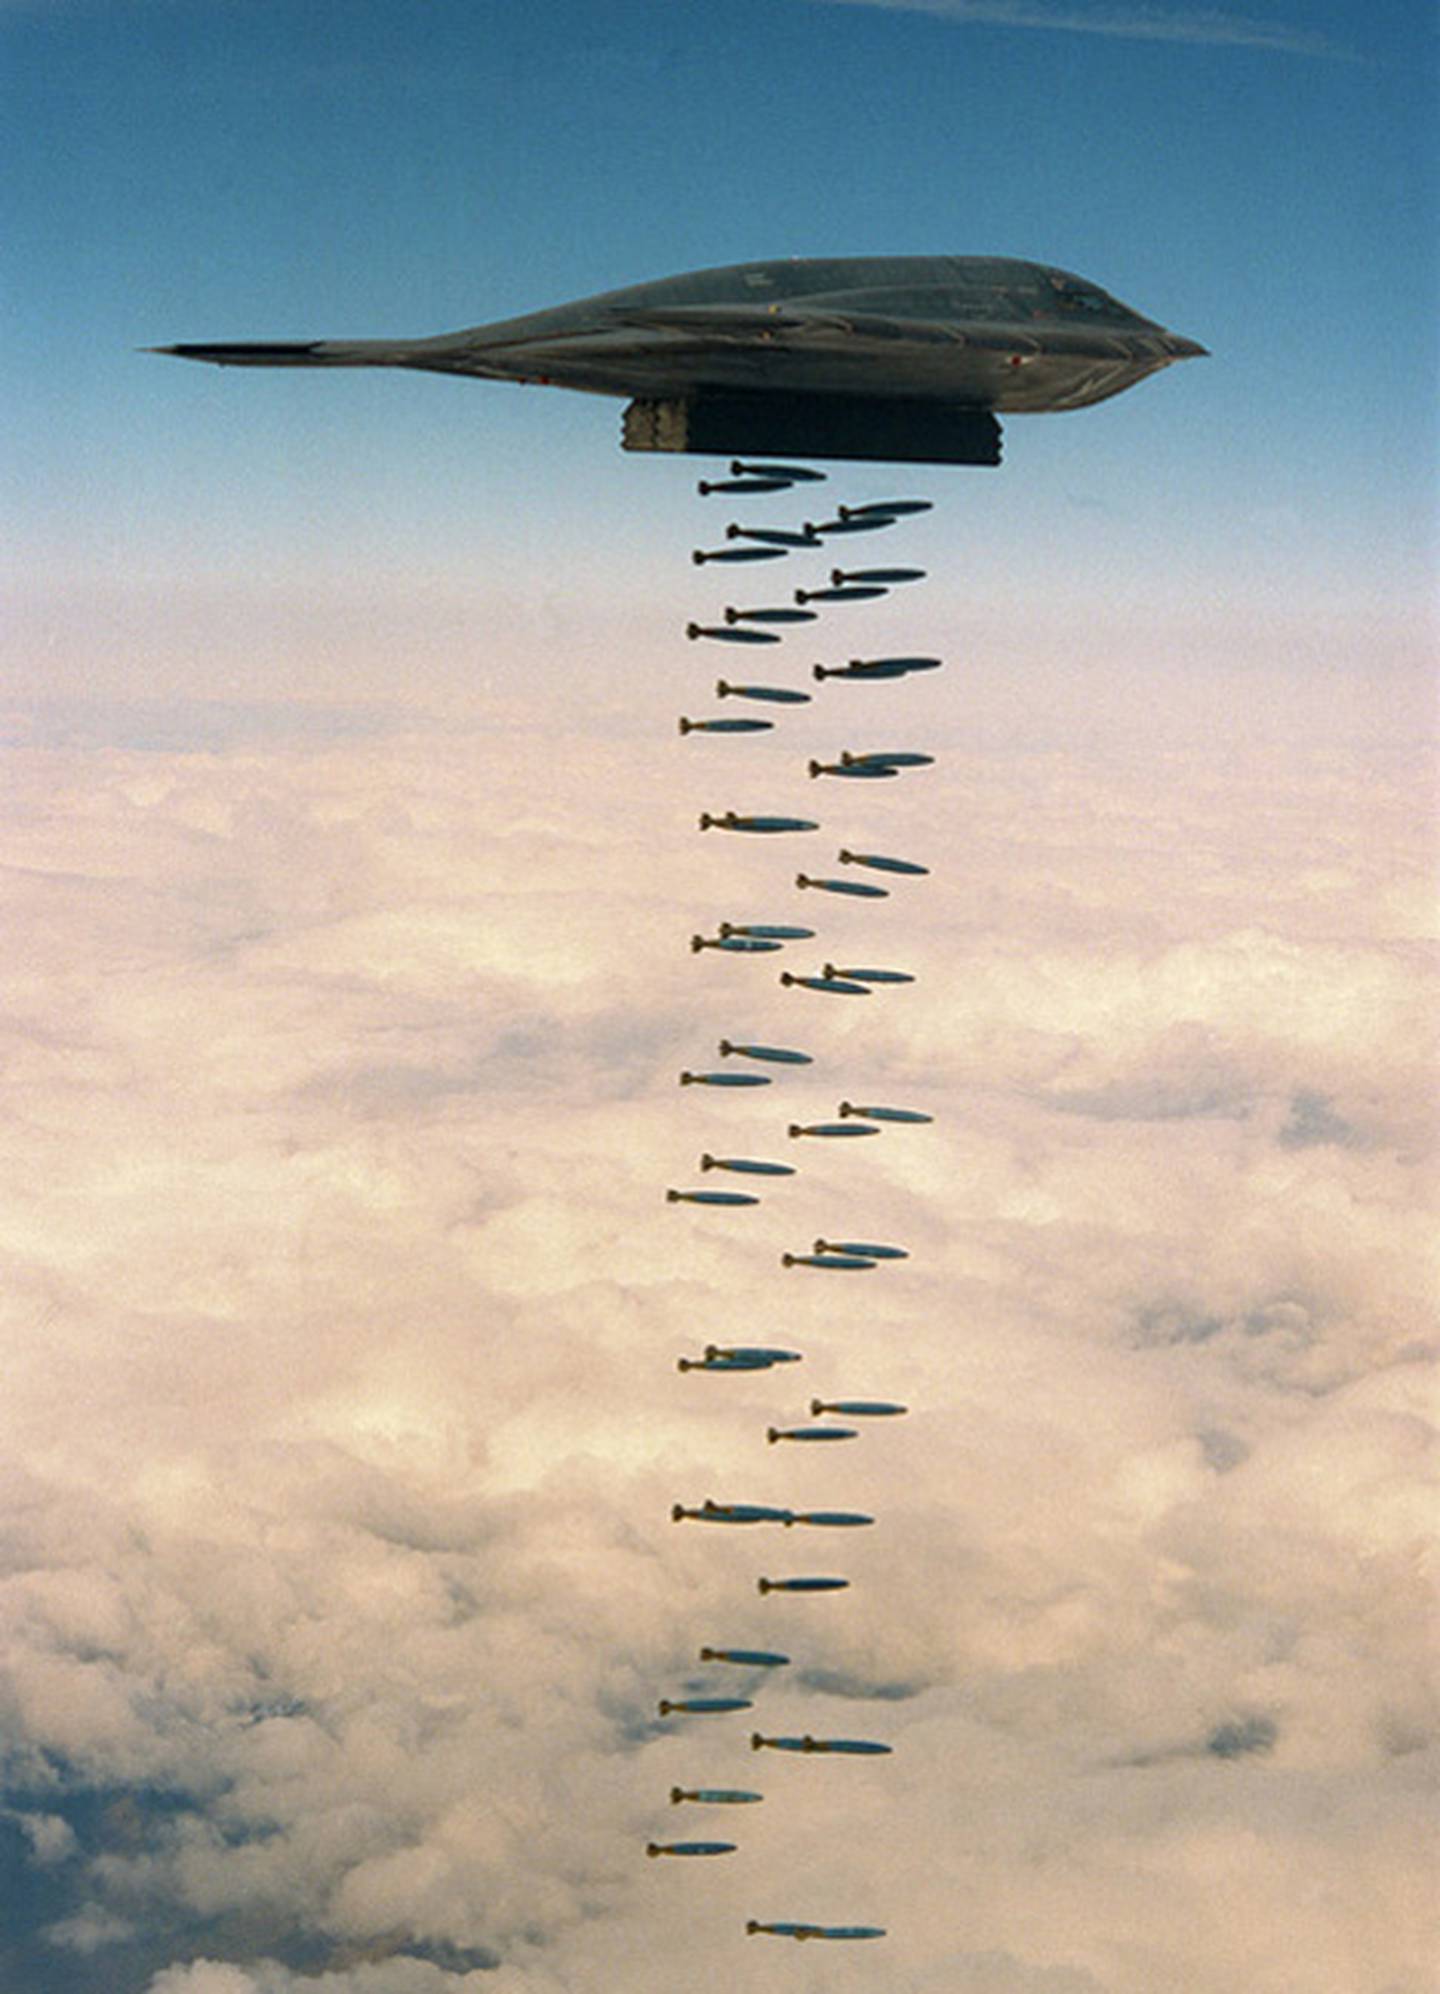 A B-2 Spirit drops its bomb payload. (Northrop Grumman)